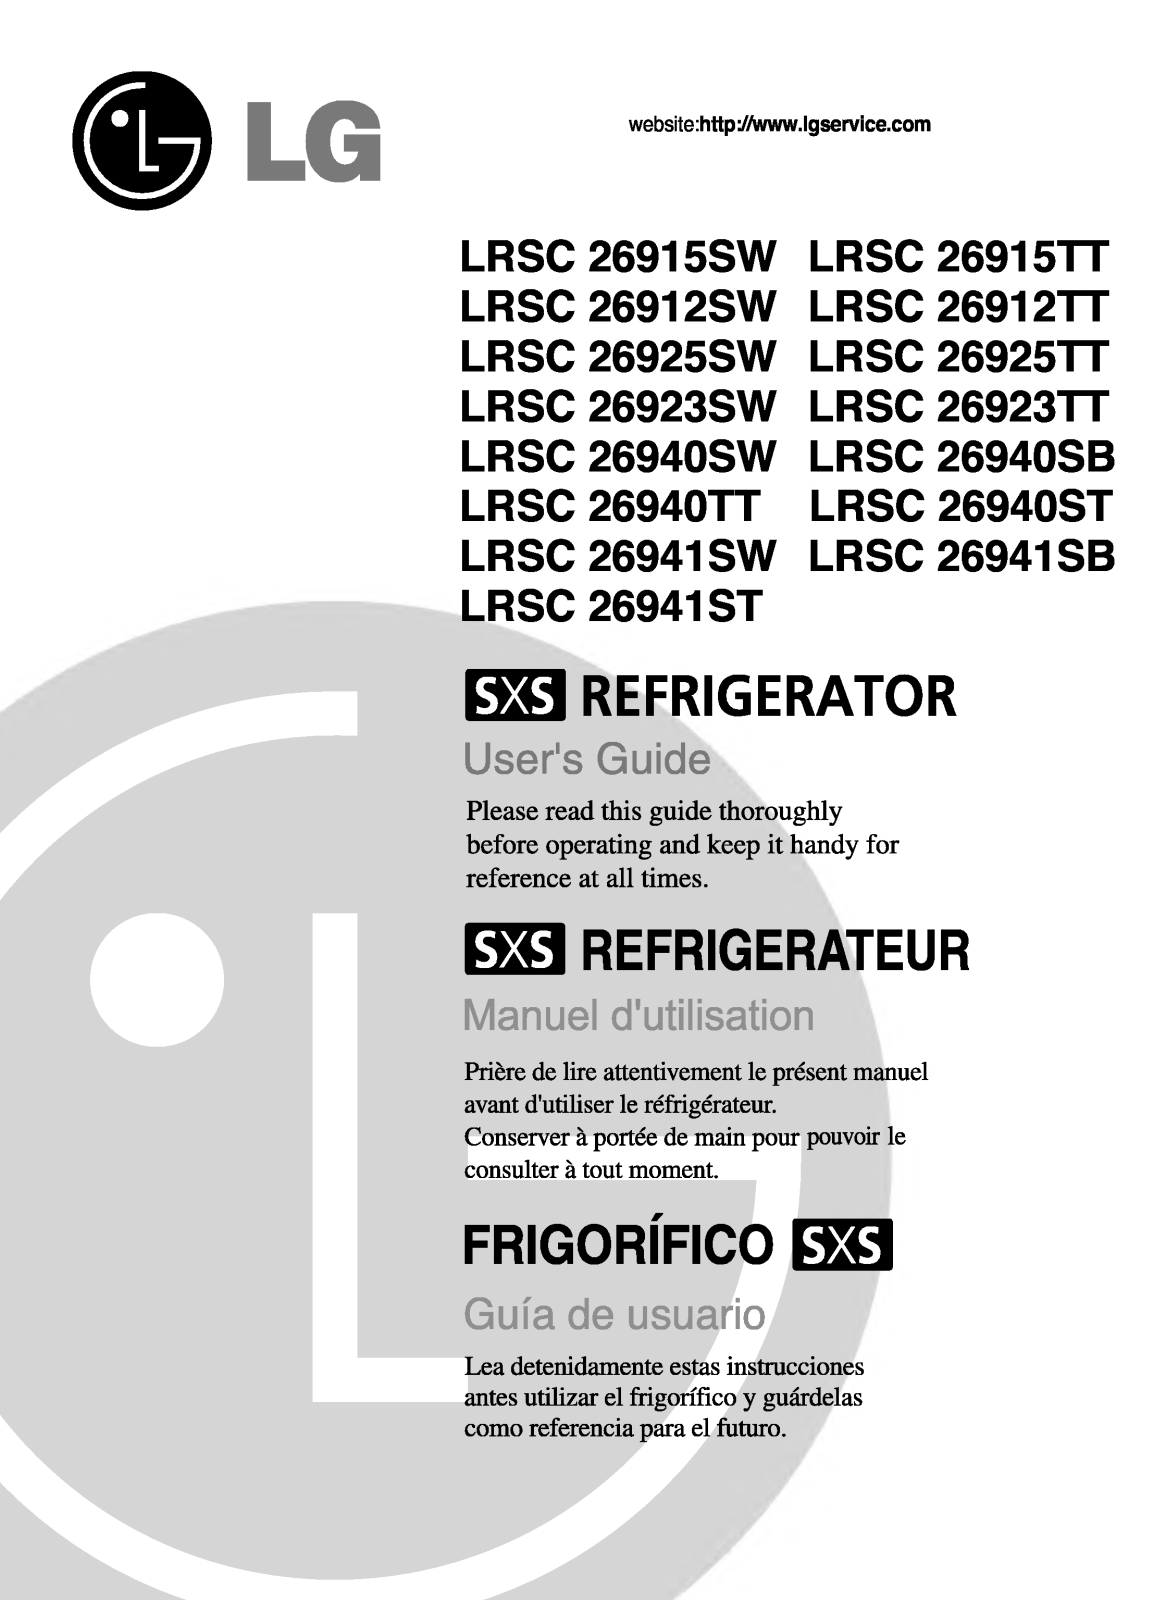 LG LRSC26941SB, LRSC26912TT, LRSC26940SB, LRSC26940TT, LRSC26940ST User Manual